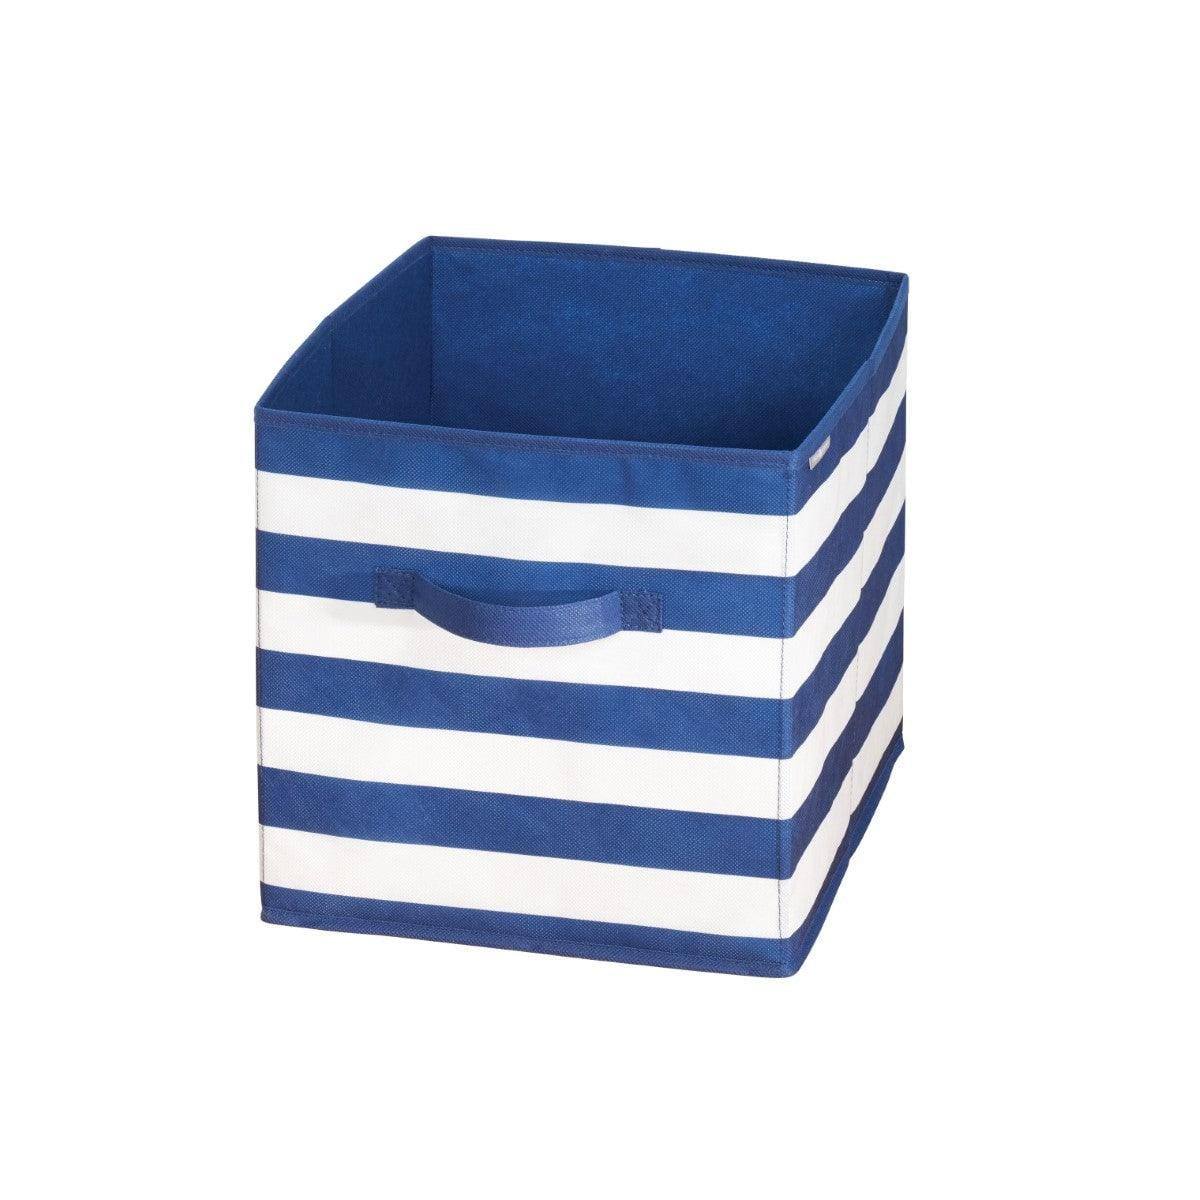 iDesign Rugby Storage Cube Medium - Navy & White Stripes